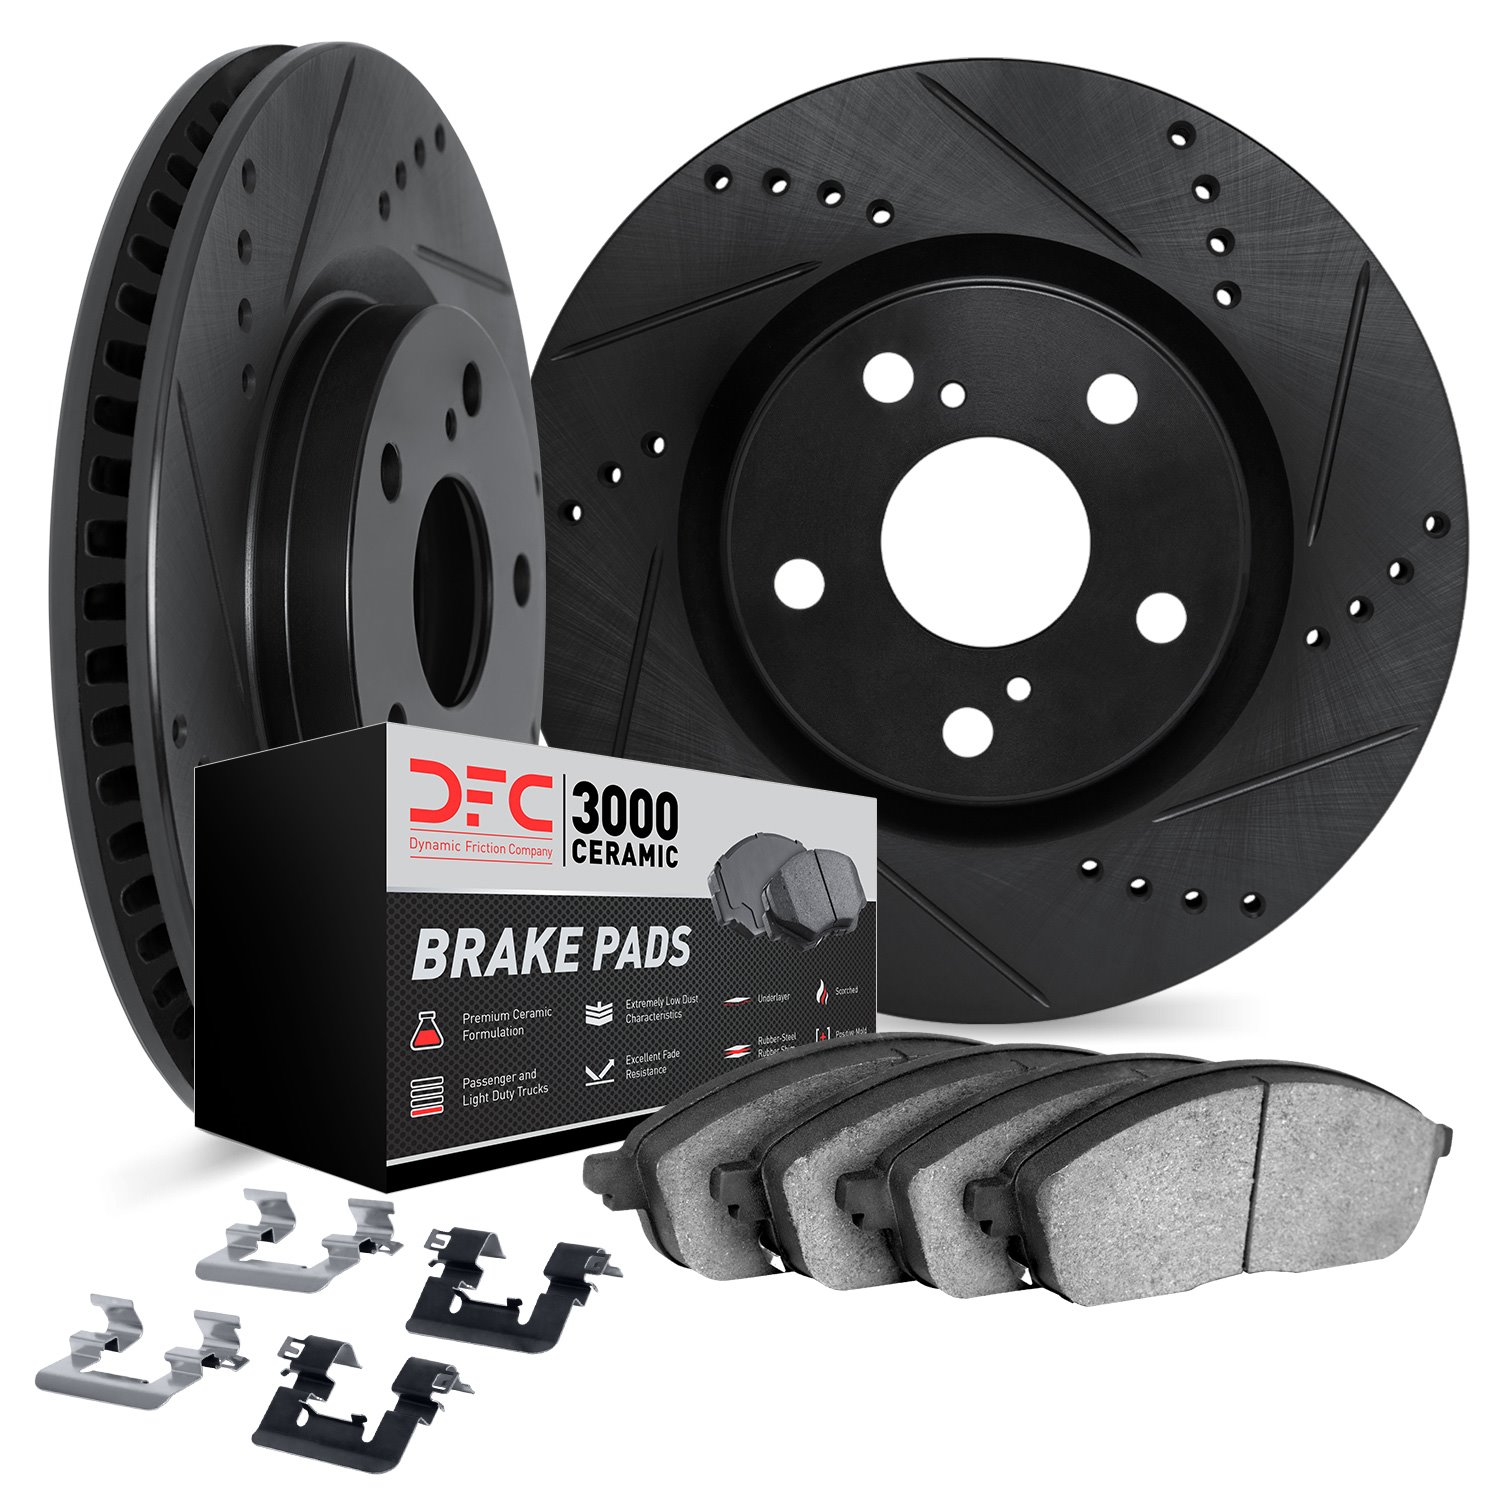 8312-75037 Drilled/Slotted Brake Rotors with 3000-Series Ceramic Brake Pads Kit & Hardware [Black], Fits Select Lexus/Toyota/Sci